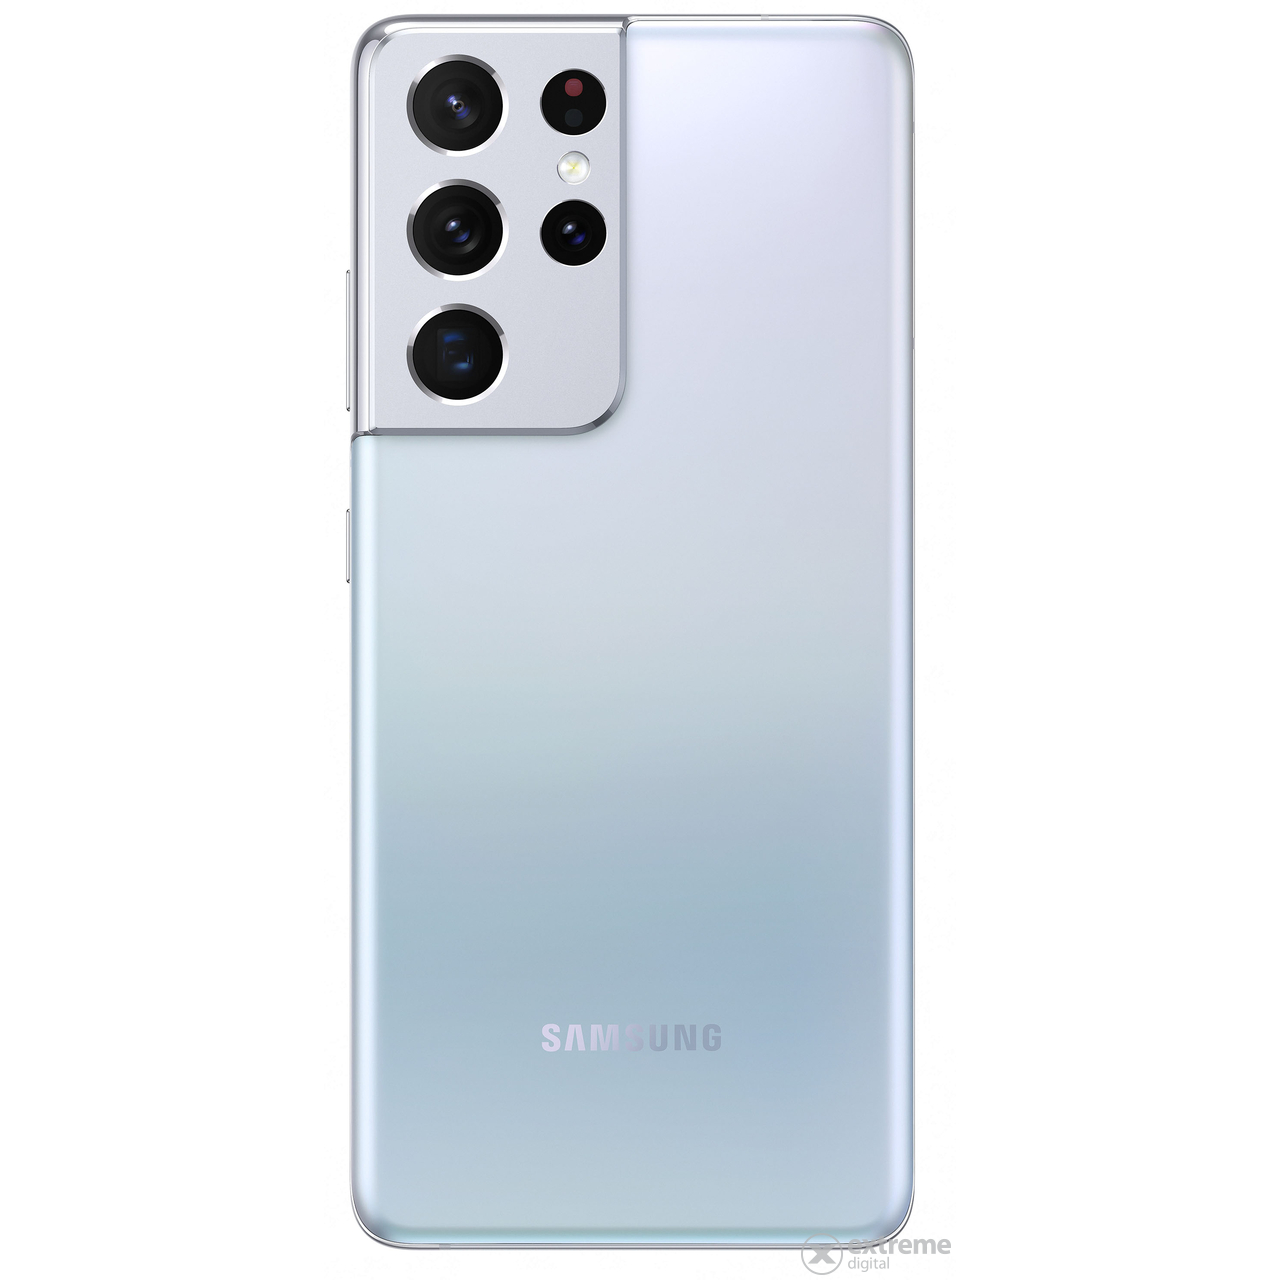 Samsung Galaxy S21 Ultra 5G 12GB/128GB Dual SIM (SM-G998) pametni telefon, Fantom srebrna